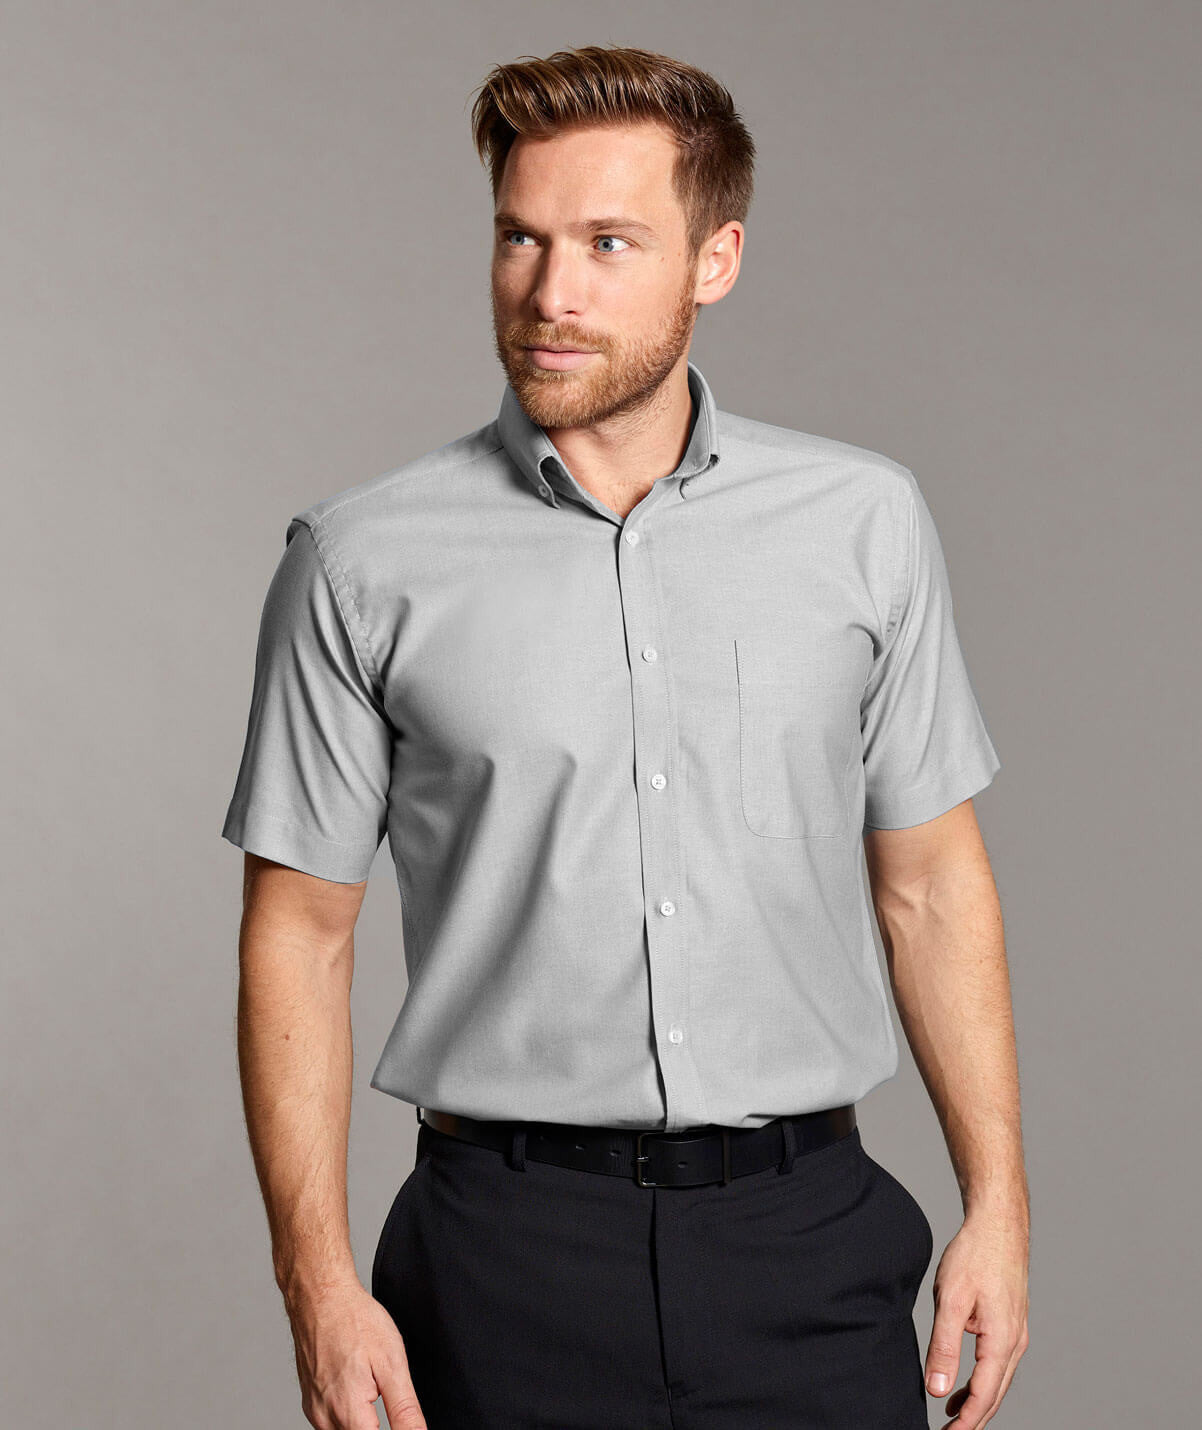 Disley Bruff Polycotton Short Sleeve Men Oxford Shirt - Grey